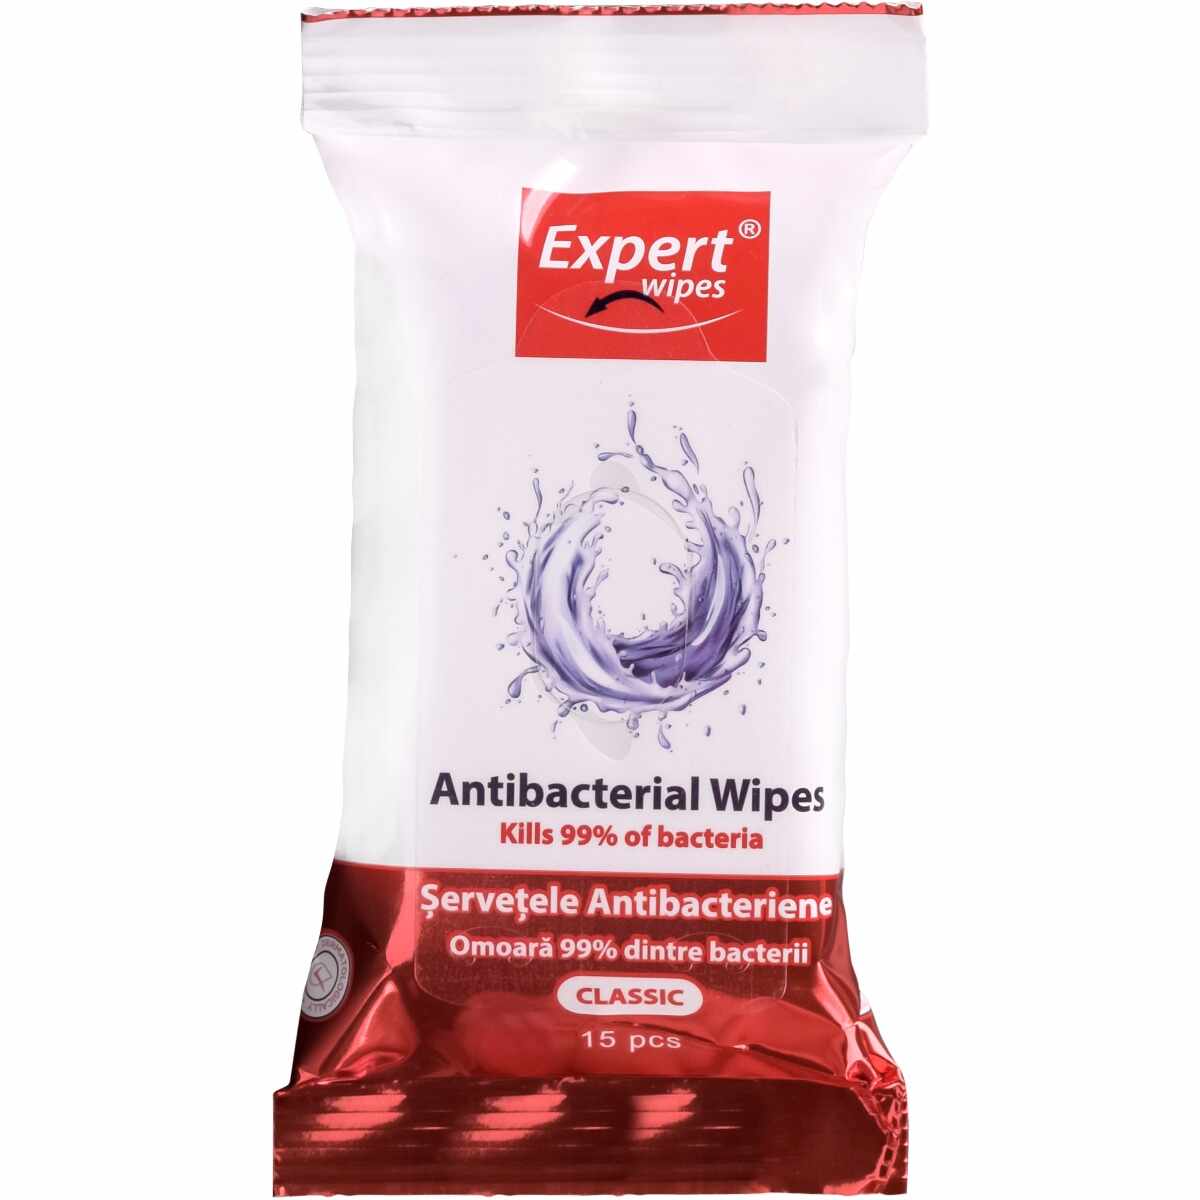 Servetele antibacteriene Expert Wipes Clasic, 15 buc